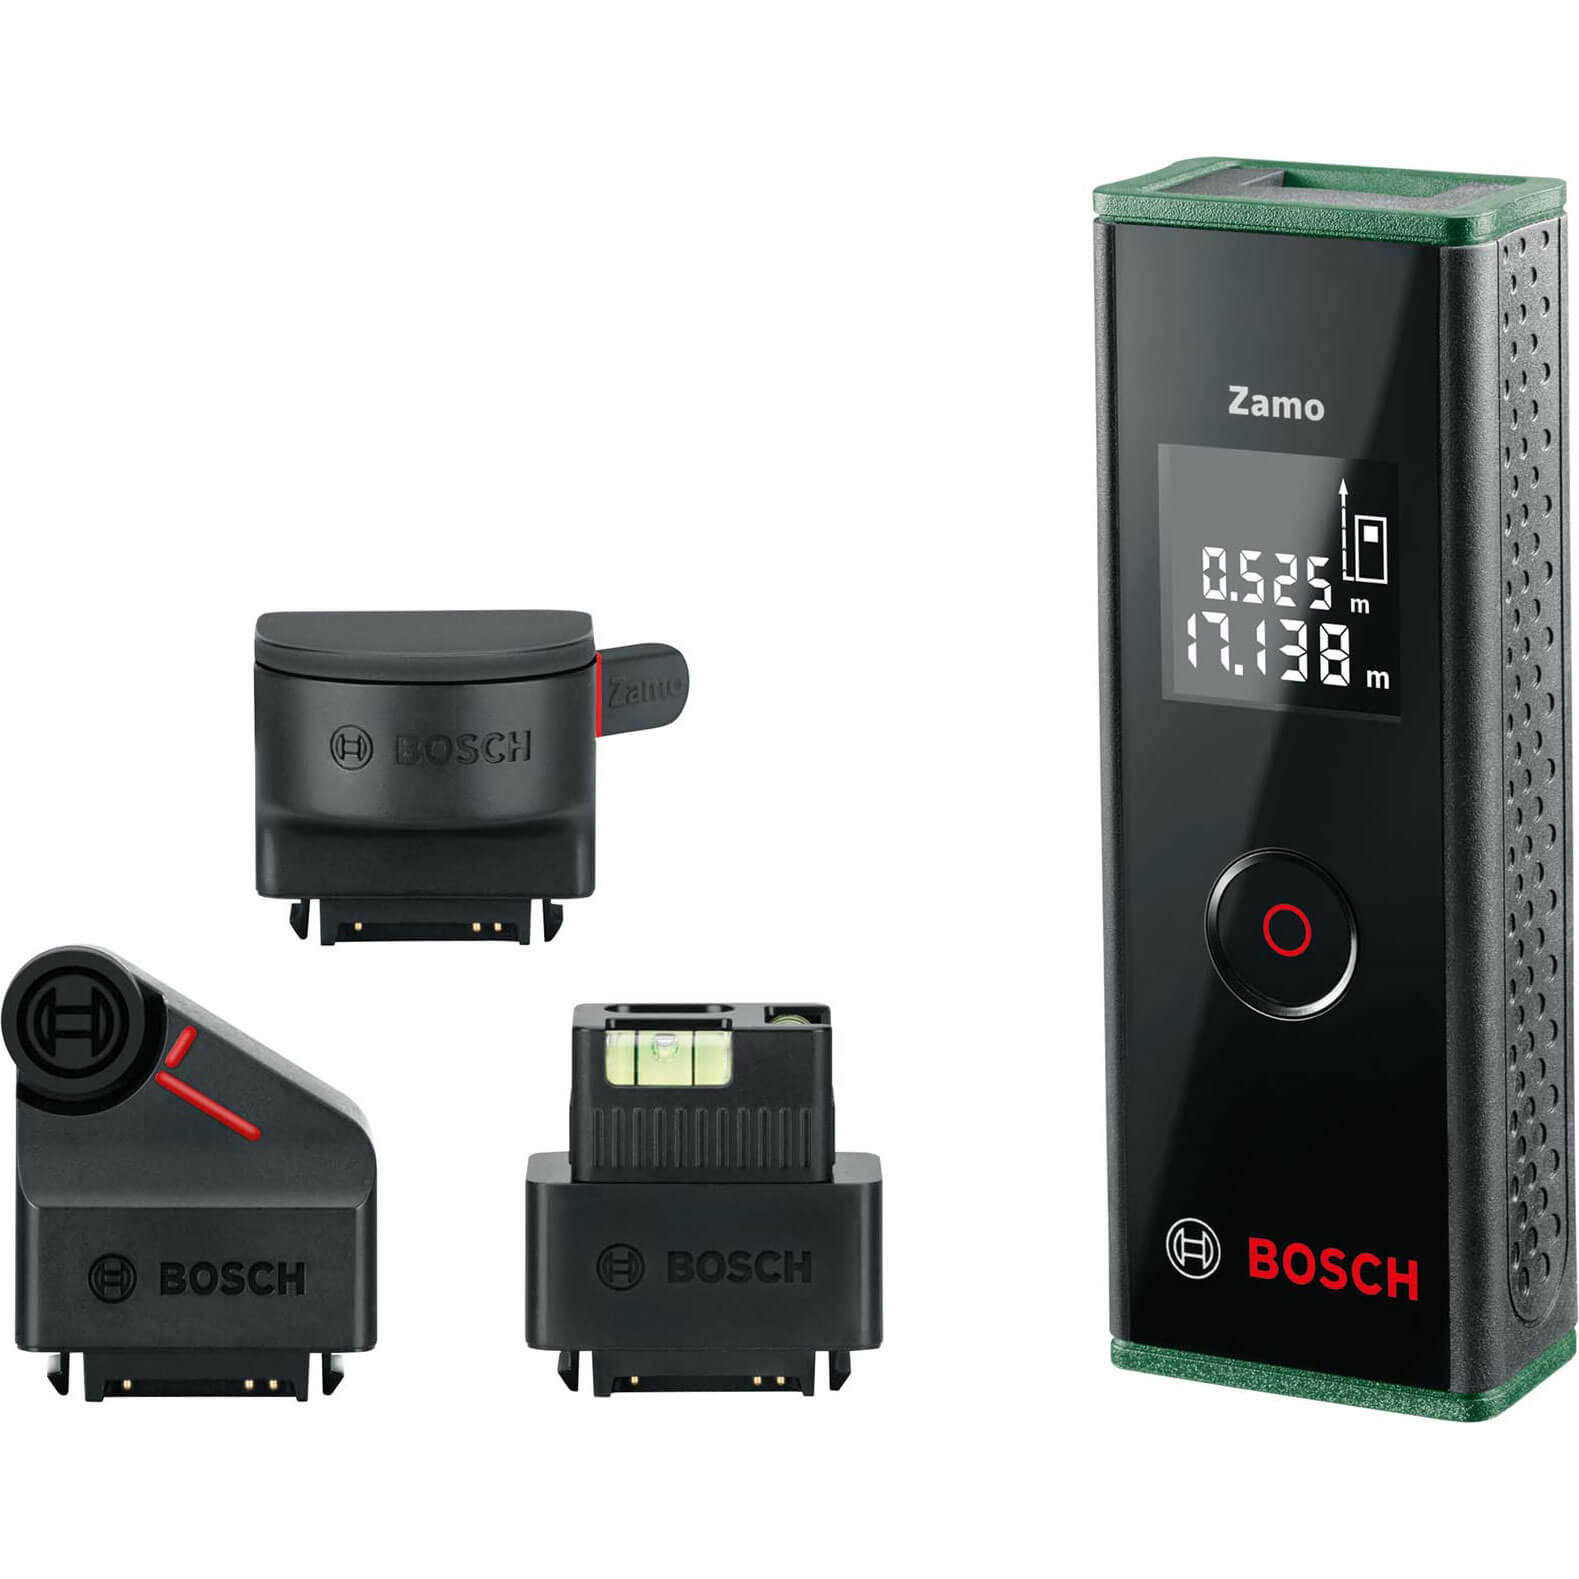 Bosch 20m Zamo III Rangefinder Laser  accuracy of / 3 mm Measurement range 20m 